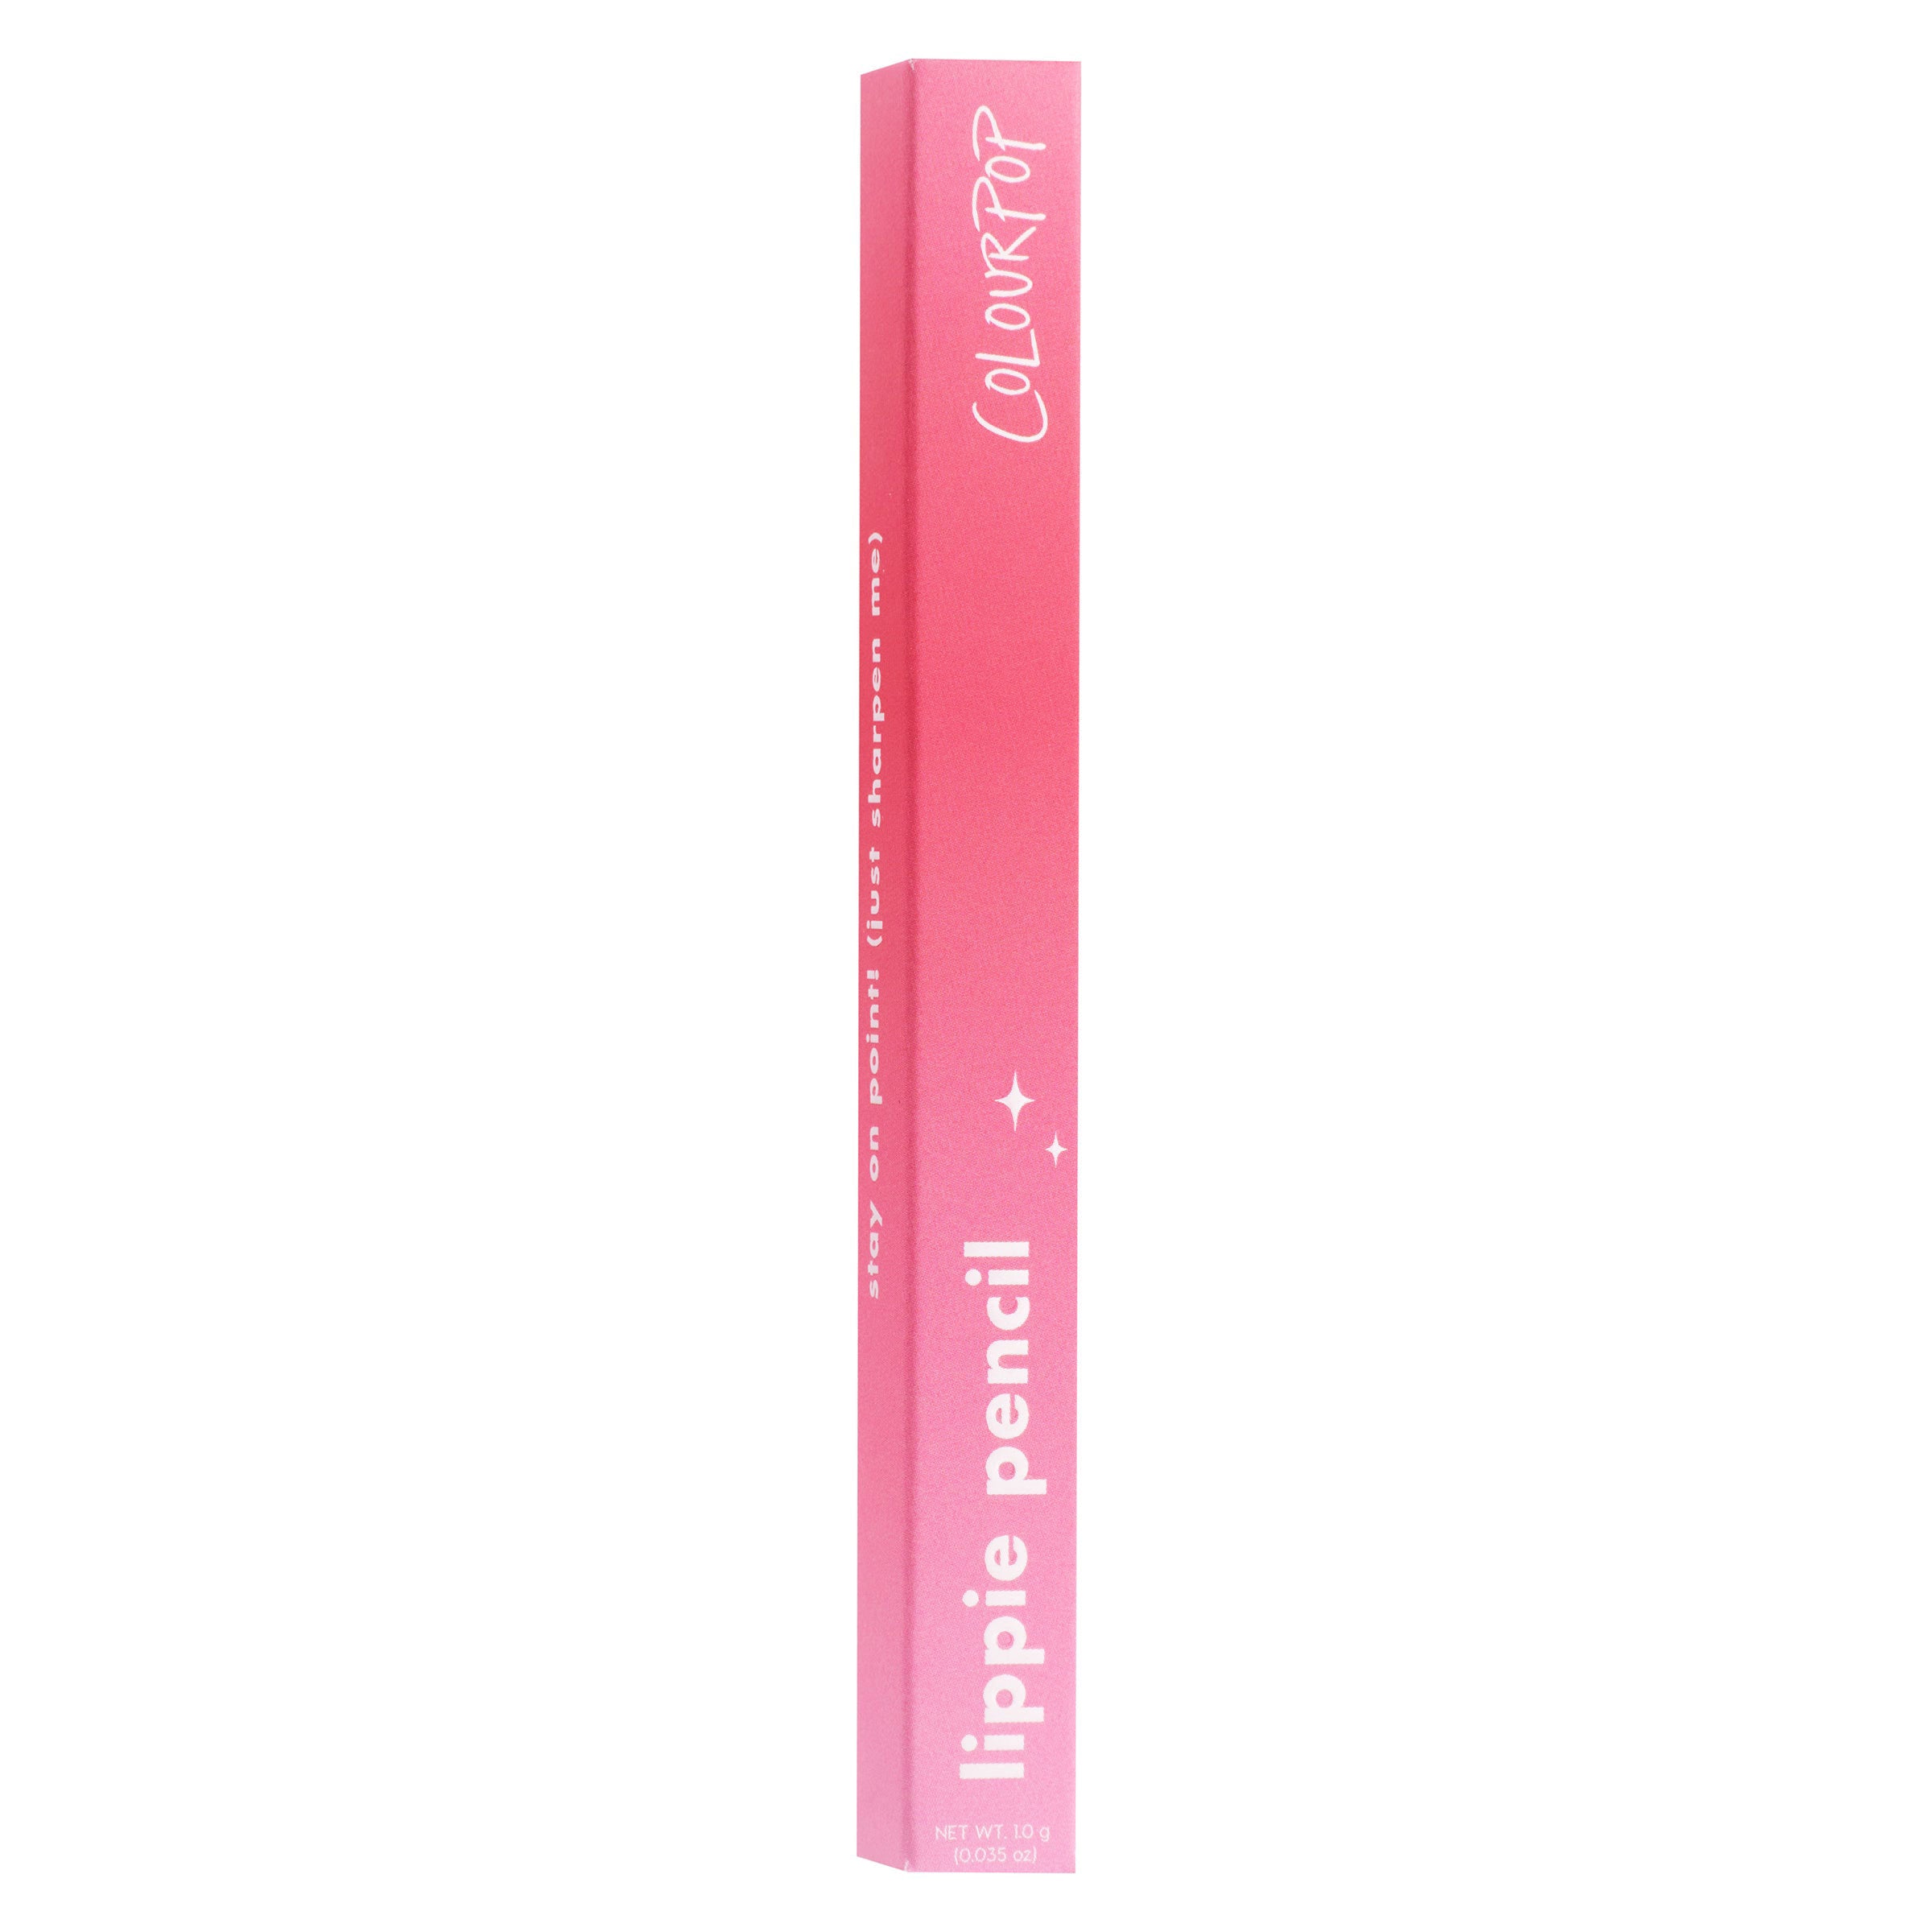 ColourPop Lippie Pencil packaging